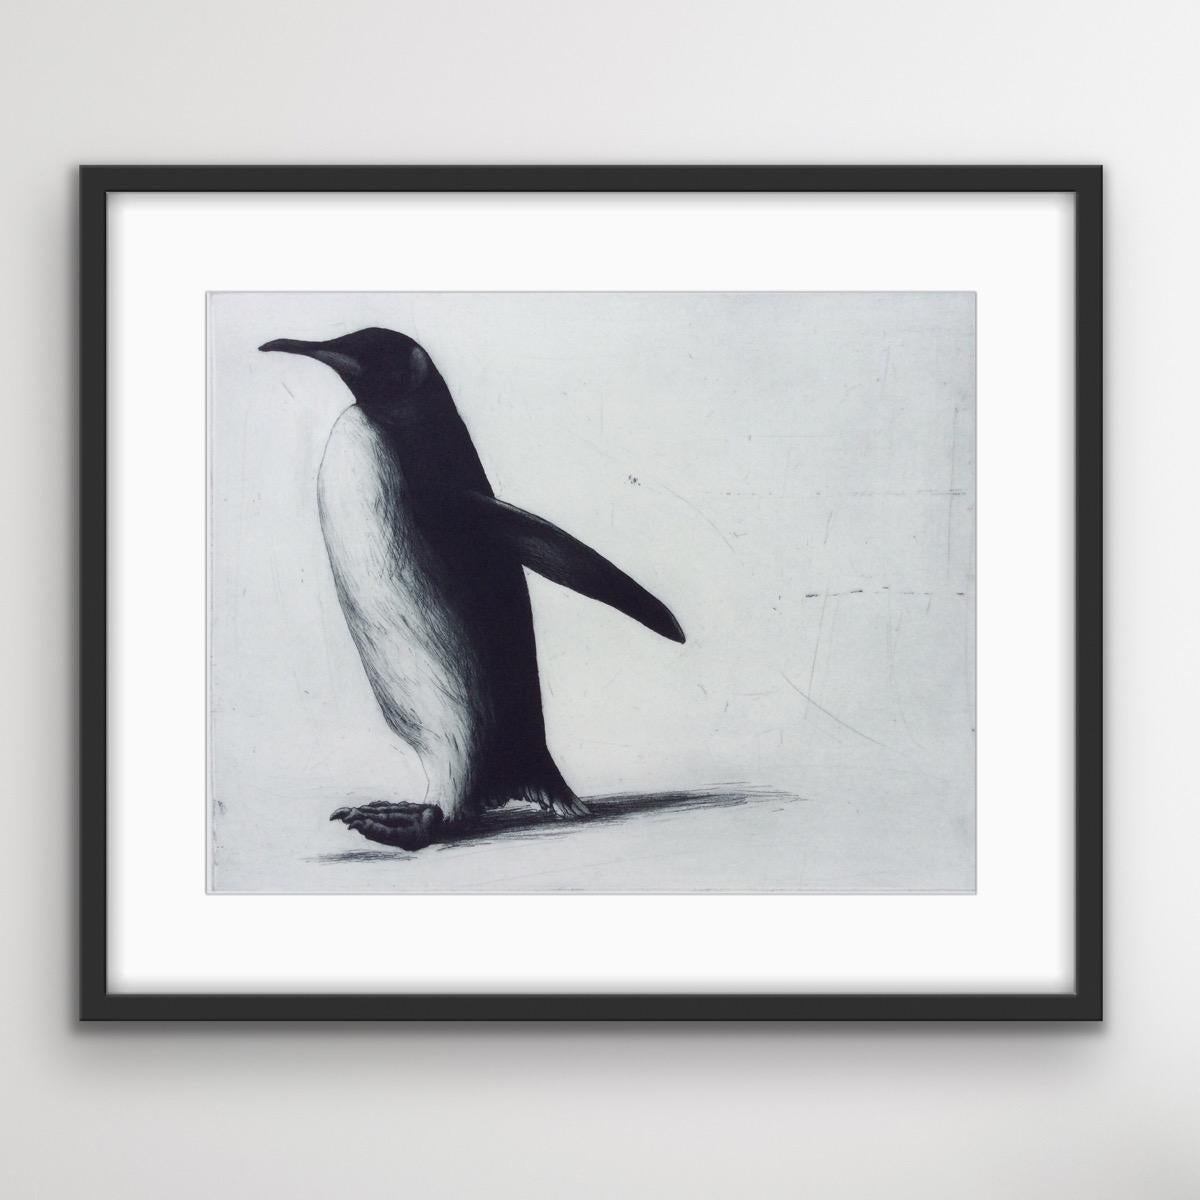 Forwards!, Penguin Art, Contemporary Mononchrome Animal Art, Black and White Art - Gray Still-Life Print by Helen Fay